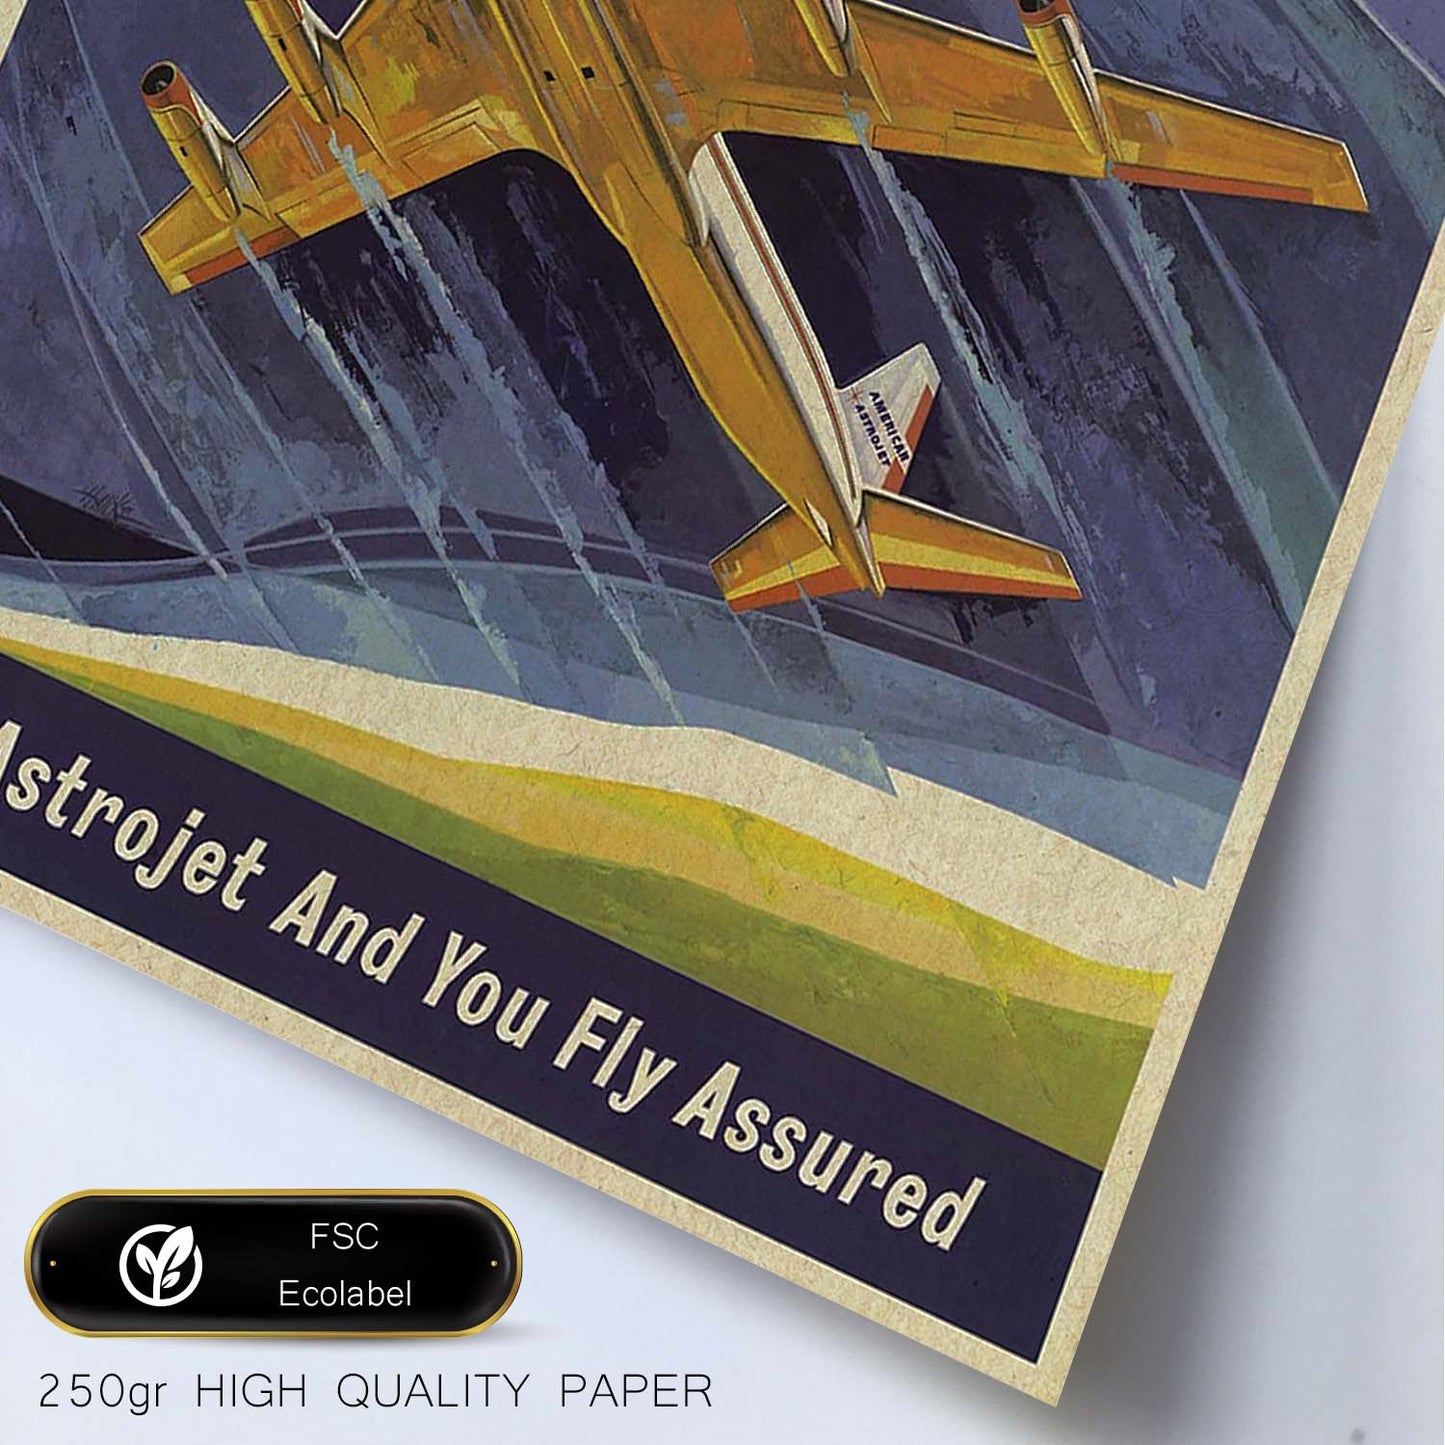 Poster Vintage. Cartel Vintage de América. American Airlines.-Artwork-Nacnic-Nacnic Estudio SL